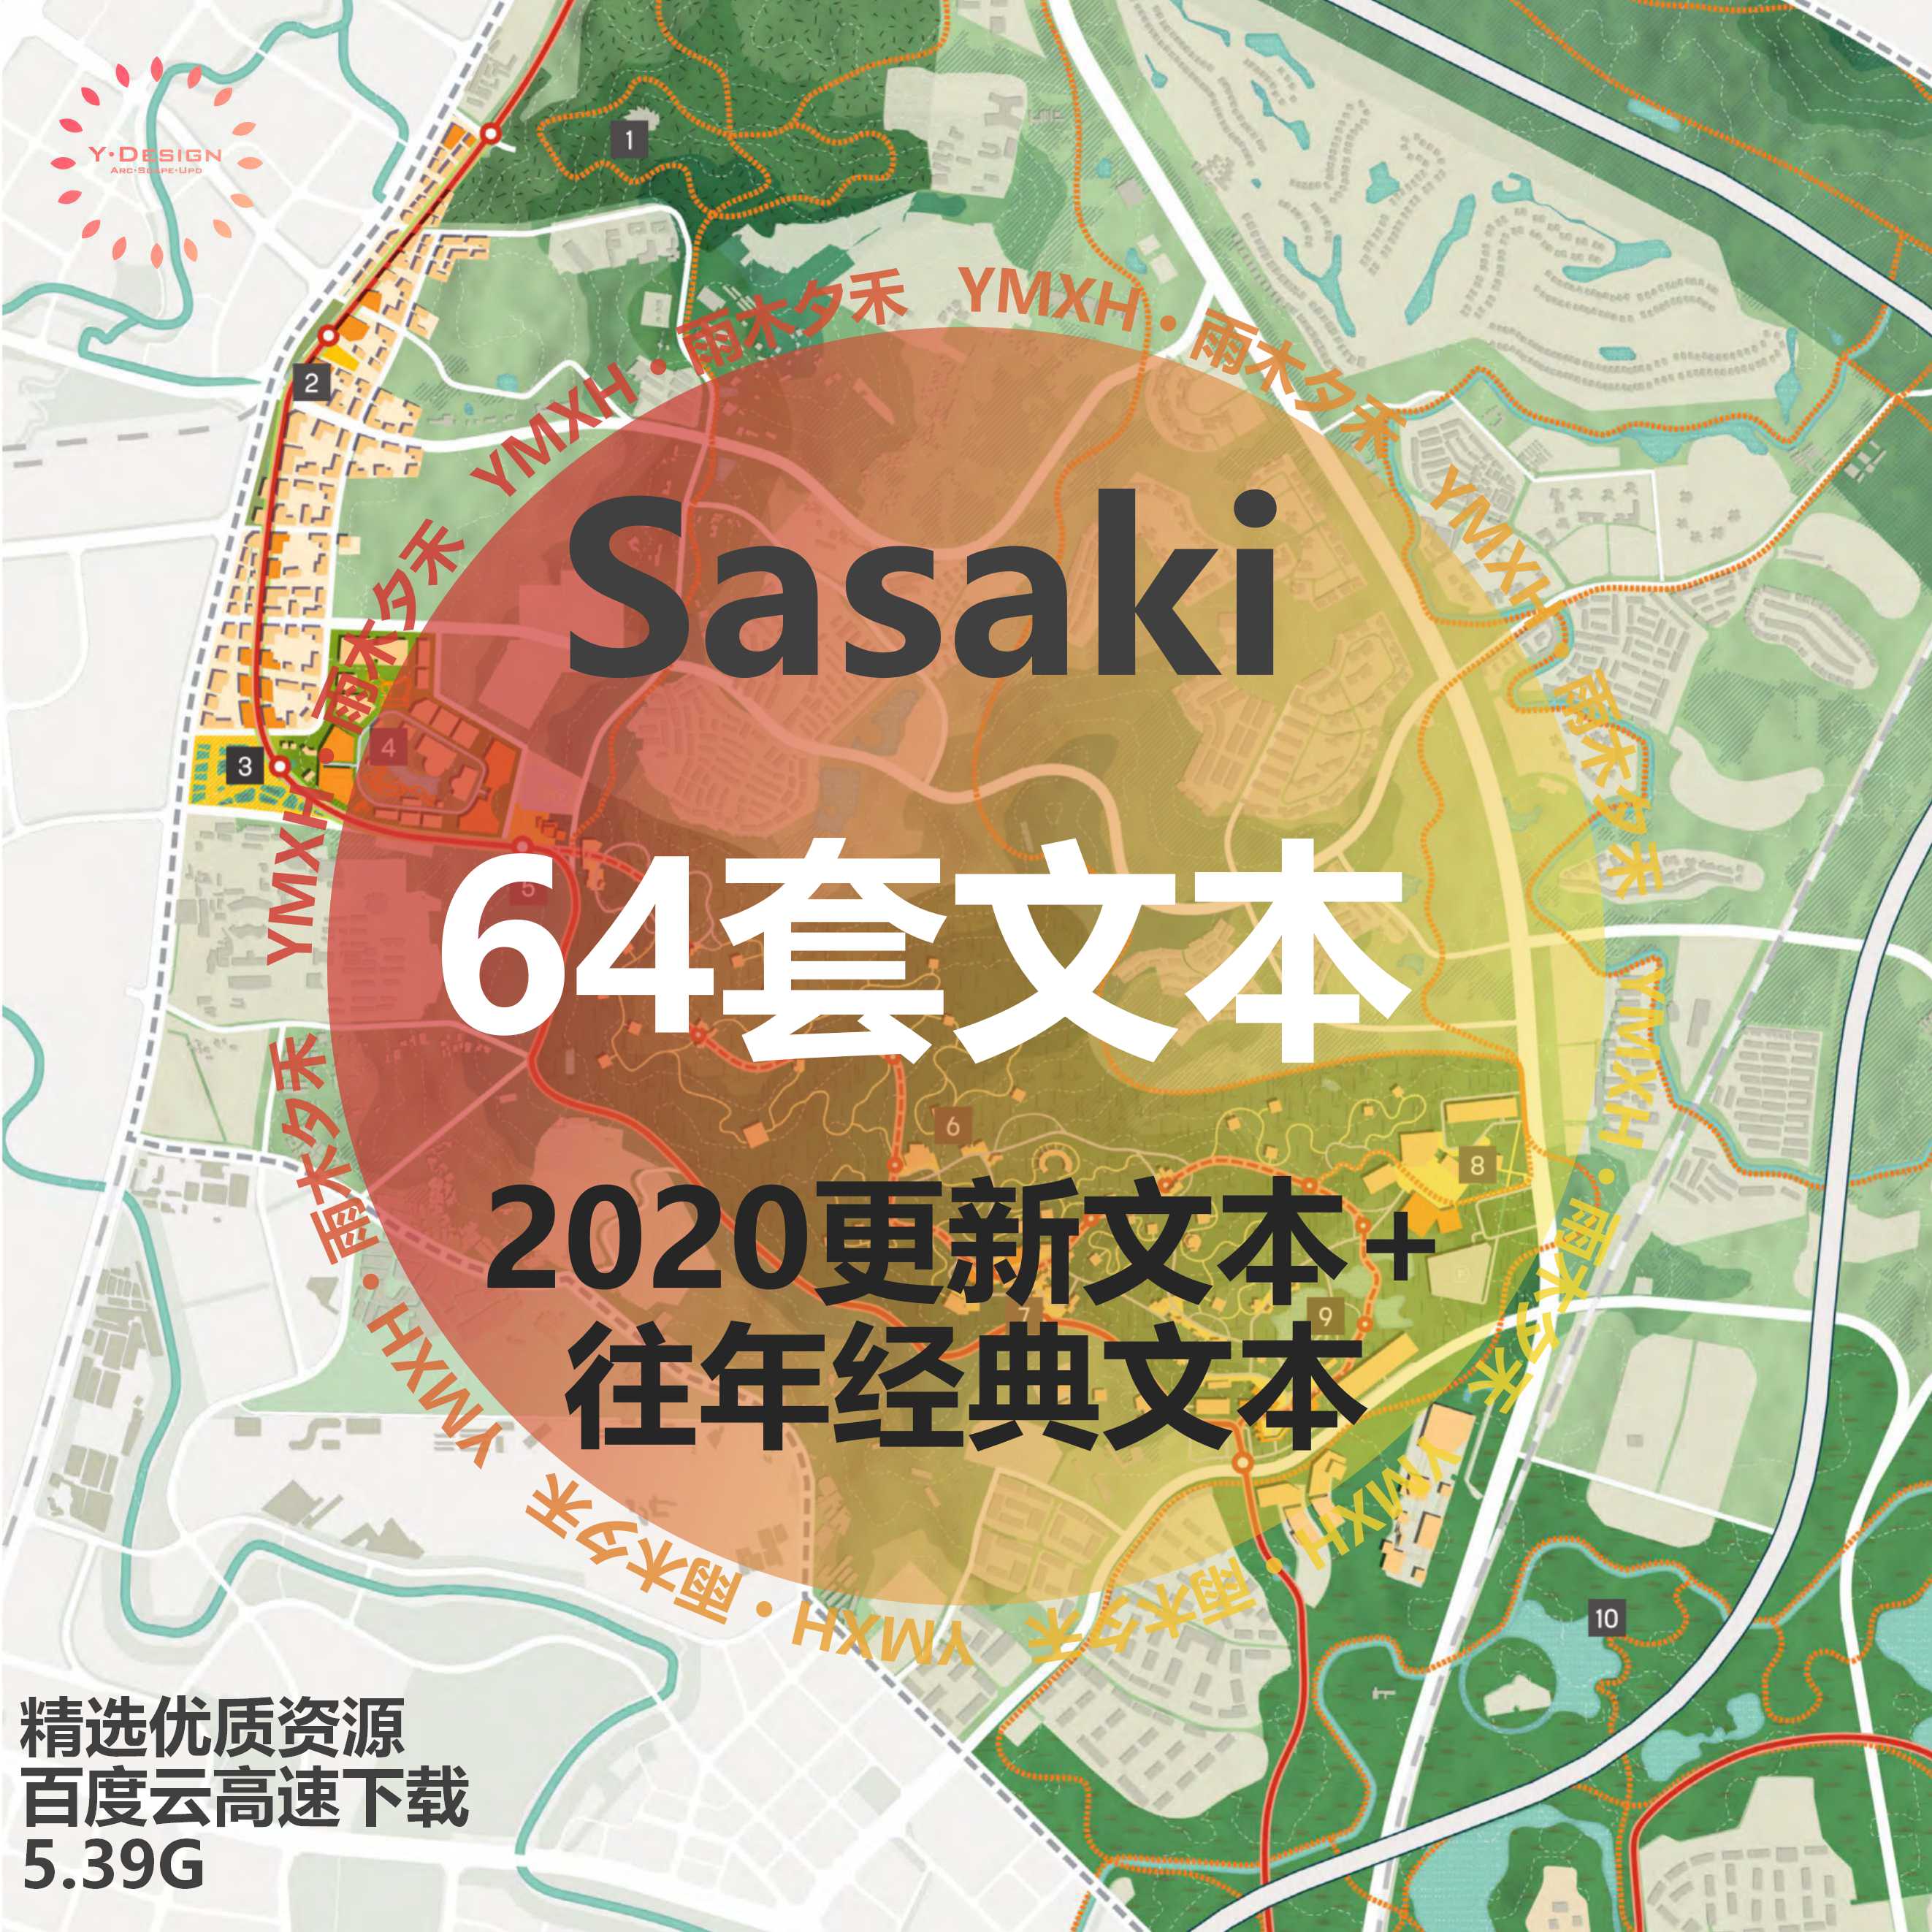 T1113 2020更新SASAKI64套文本公园景观城市设计方案素材sasaki...-1